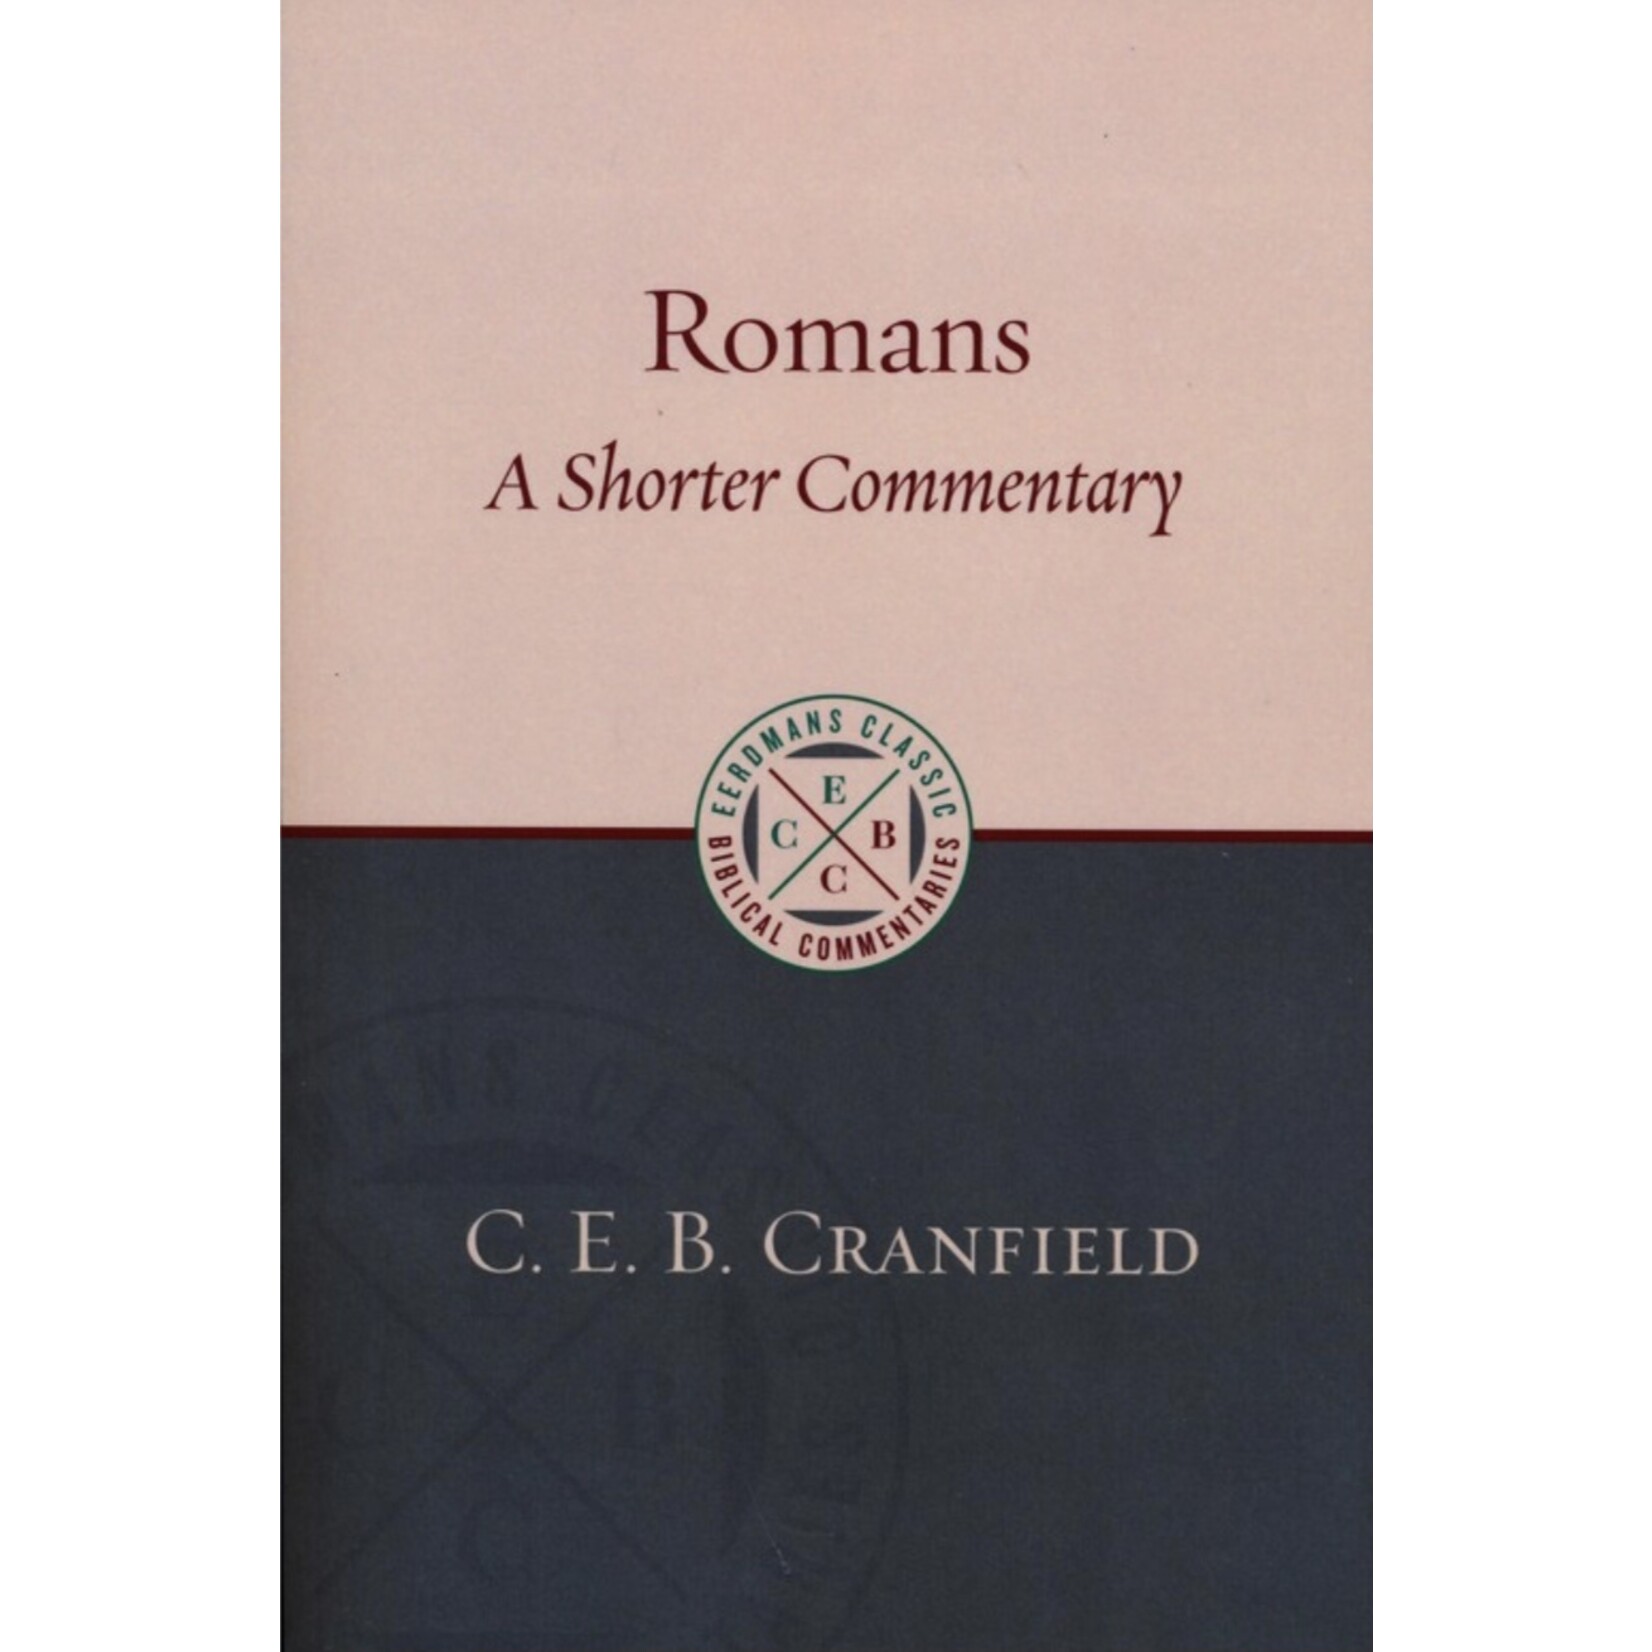 ROMANS A SHORTER COMMENTARY